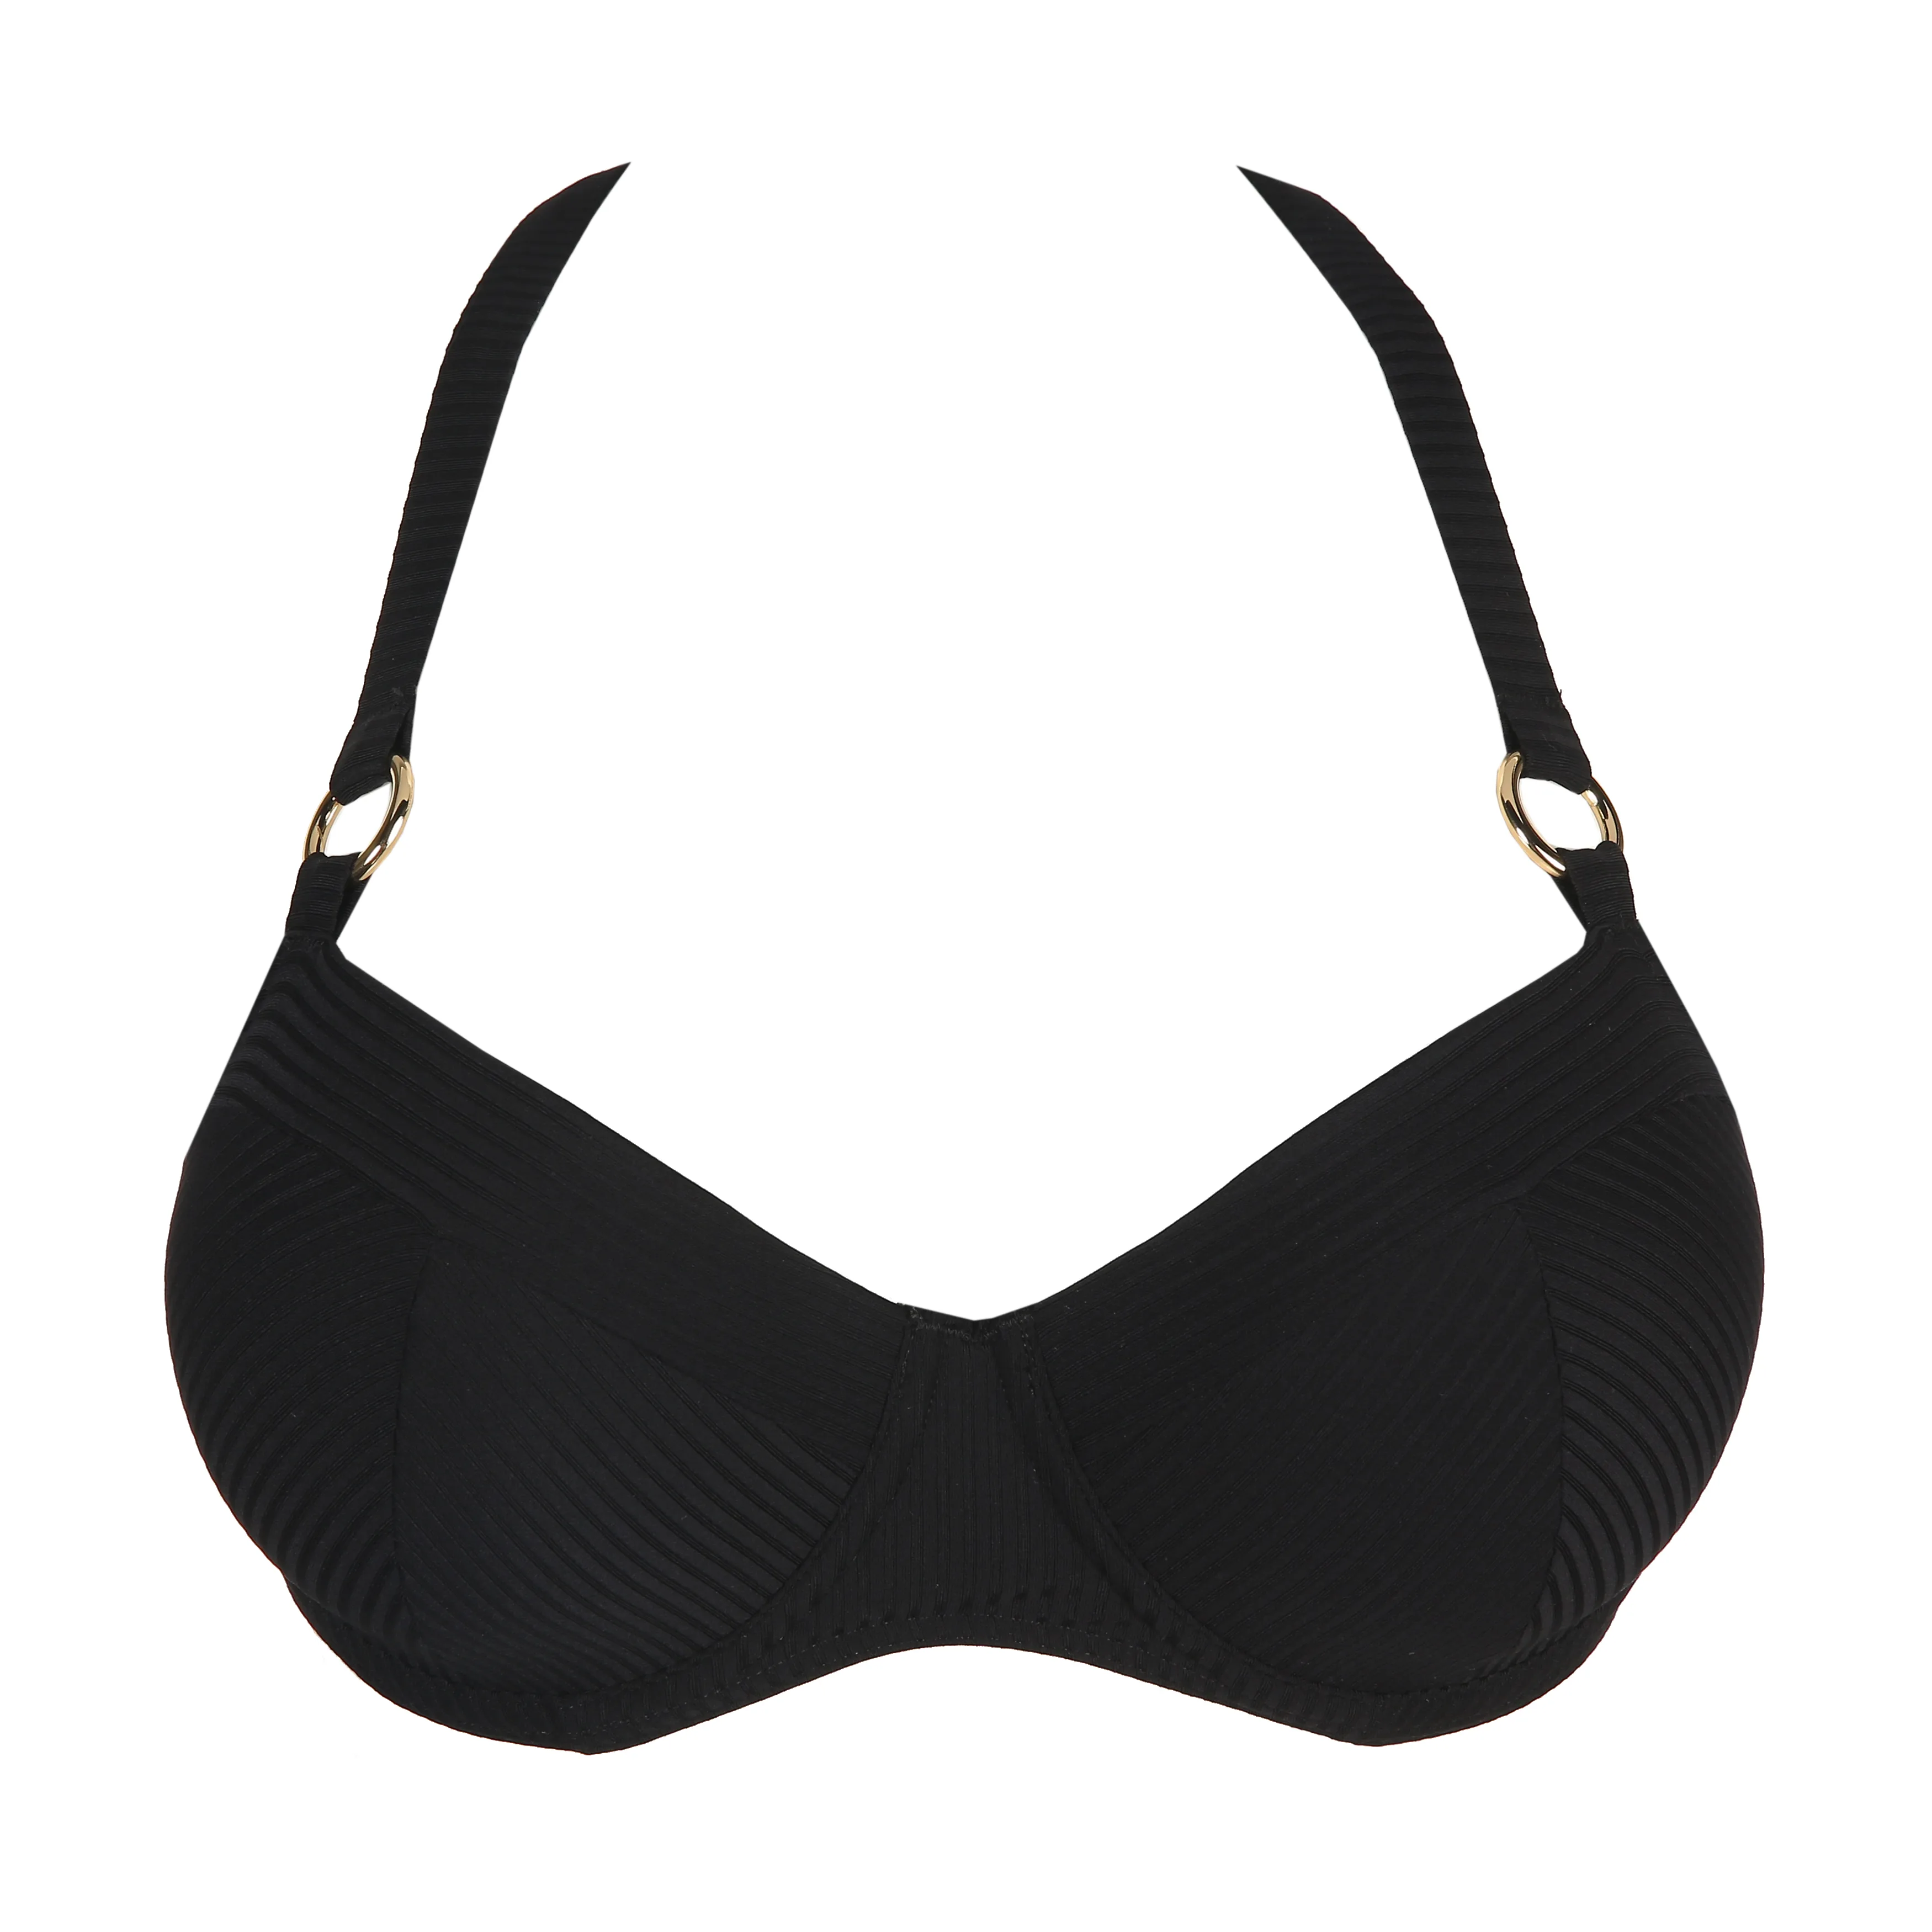 PrimaDonna Swim VENICE black bikini top full cup padded